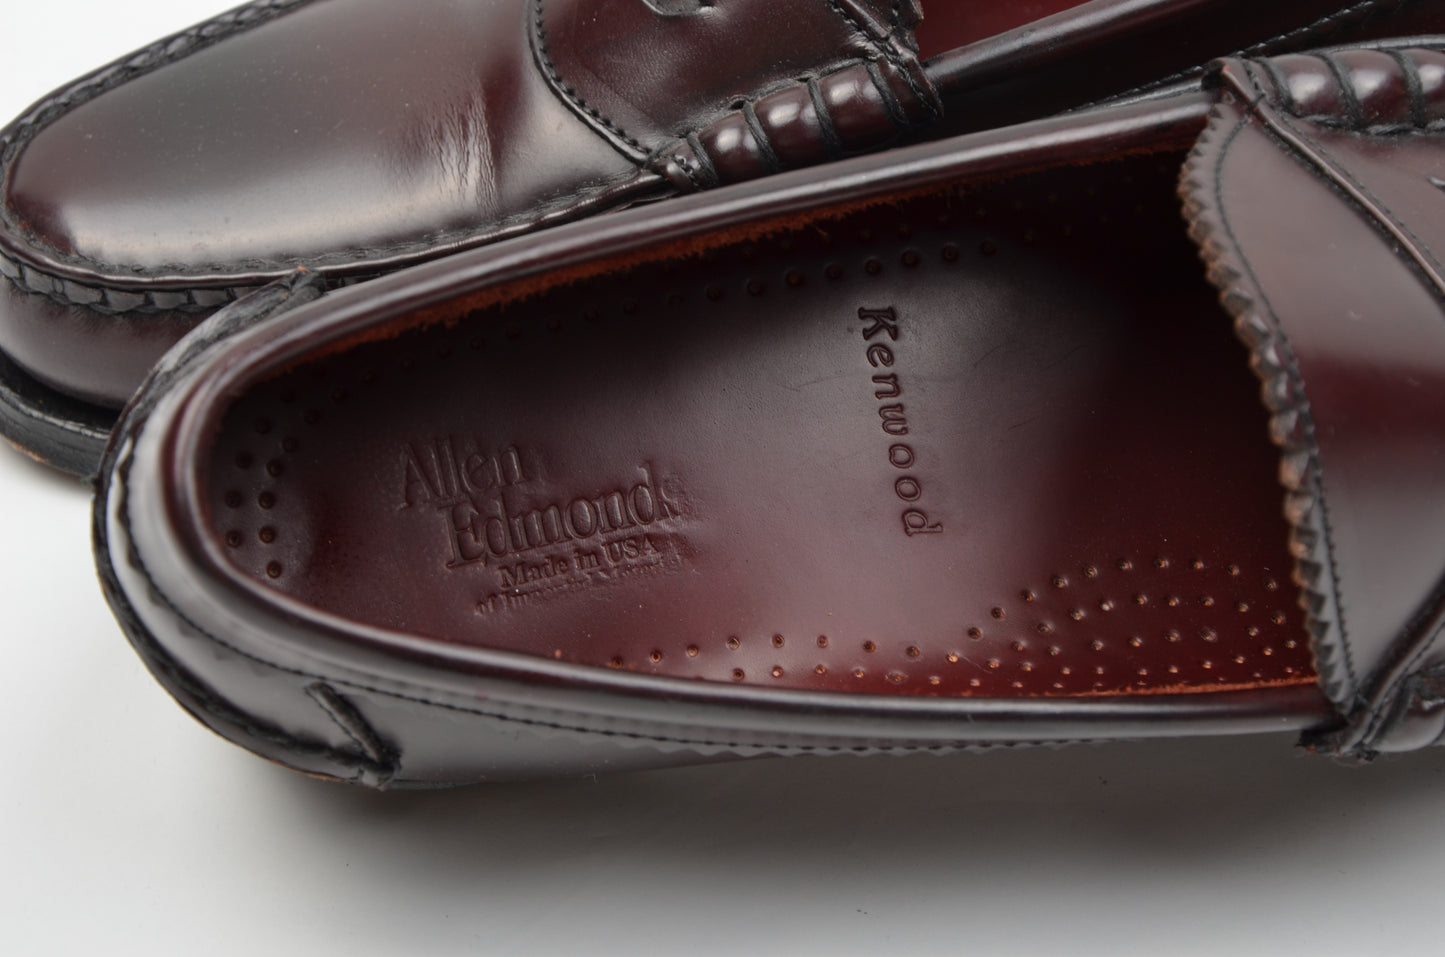 Allen Edmonds Kenwood Loafers Size 8.5 E - Burgundy